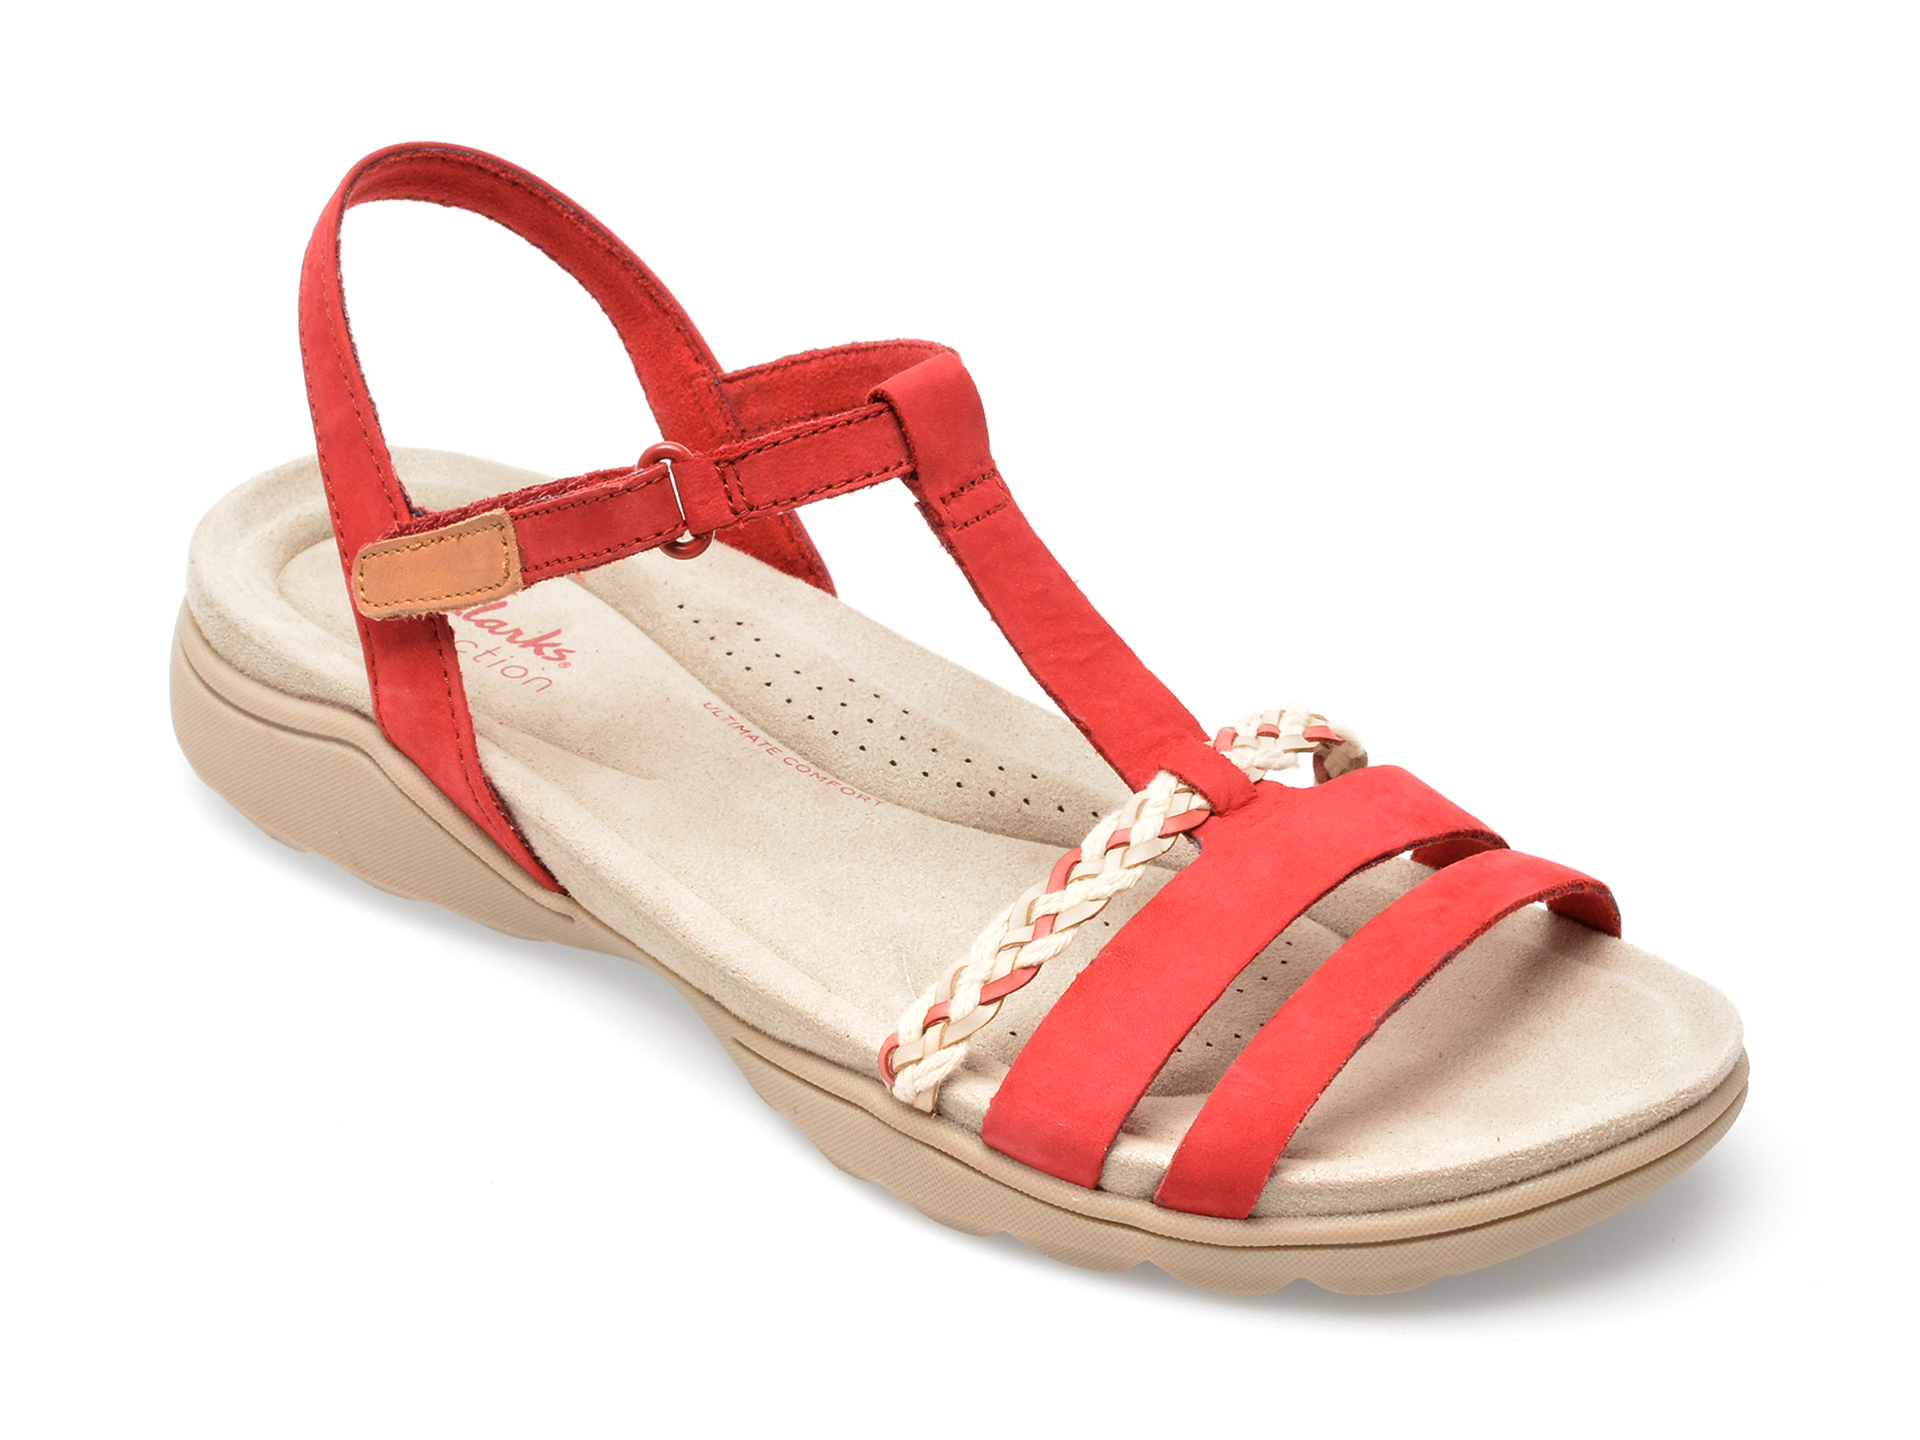 Sandale CLARKS rosii, AMANDA TEALITE 0912, din nabuc femei 2023-03-21